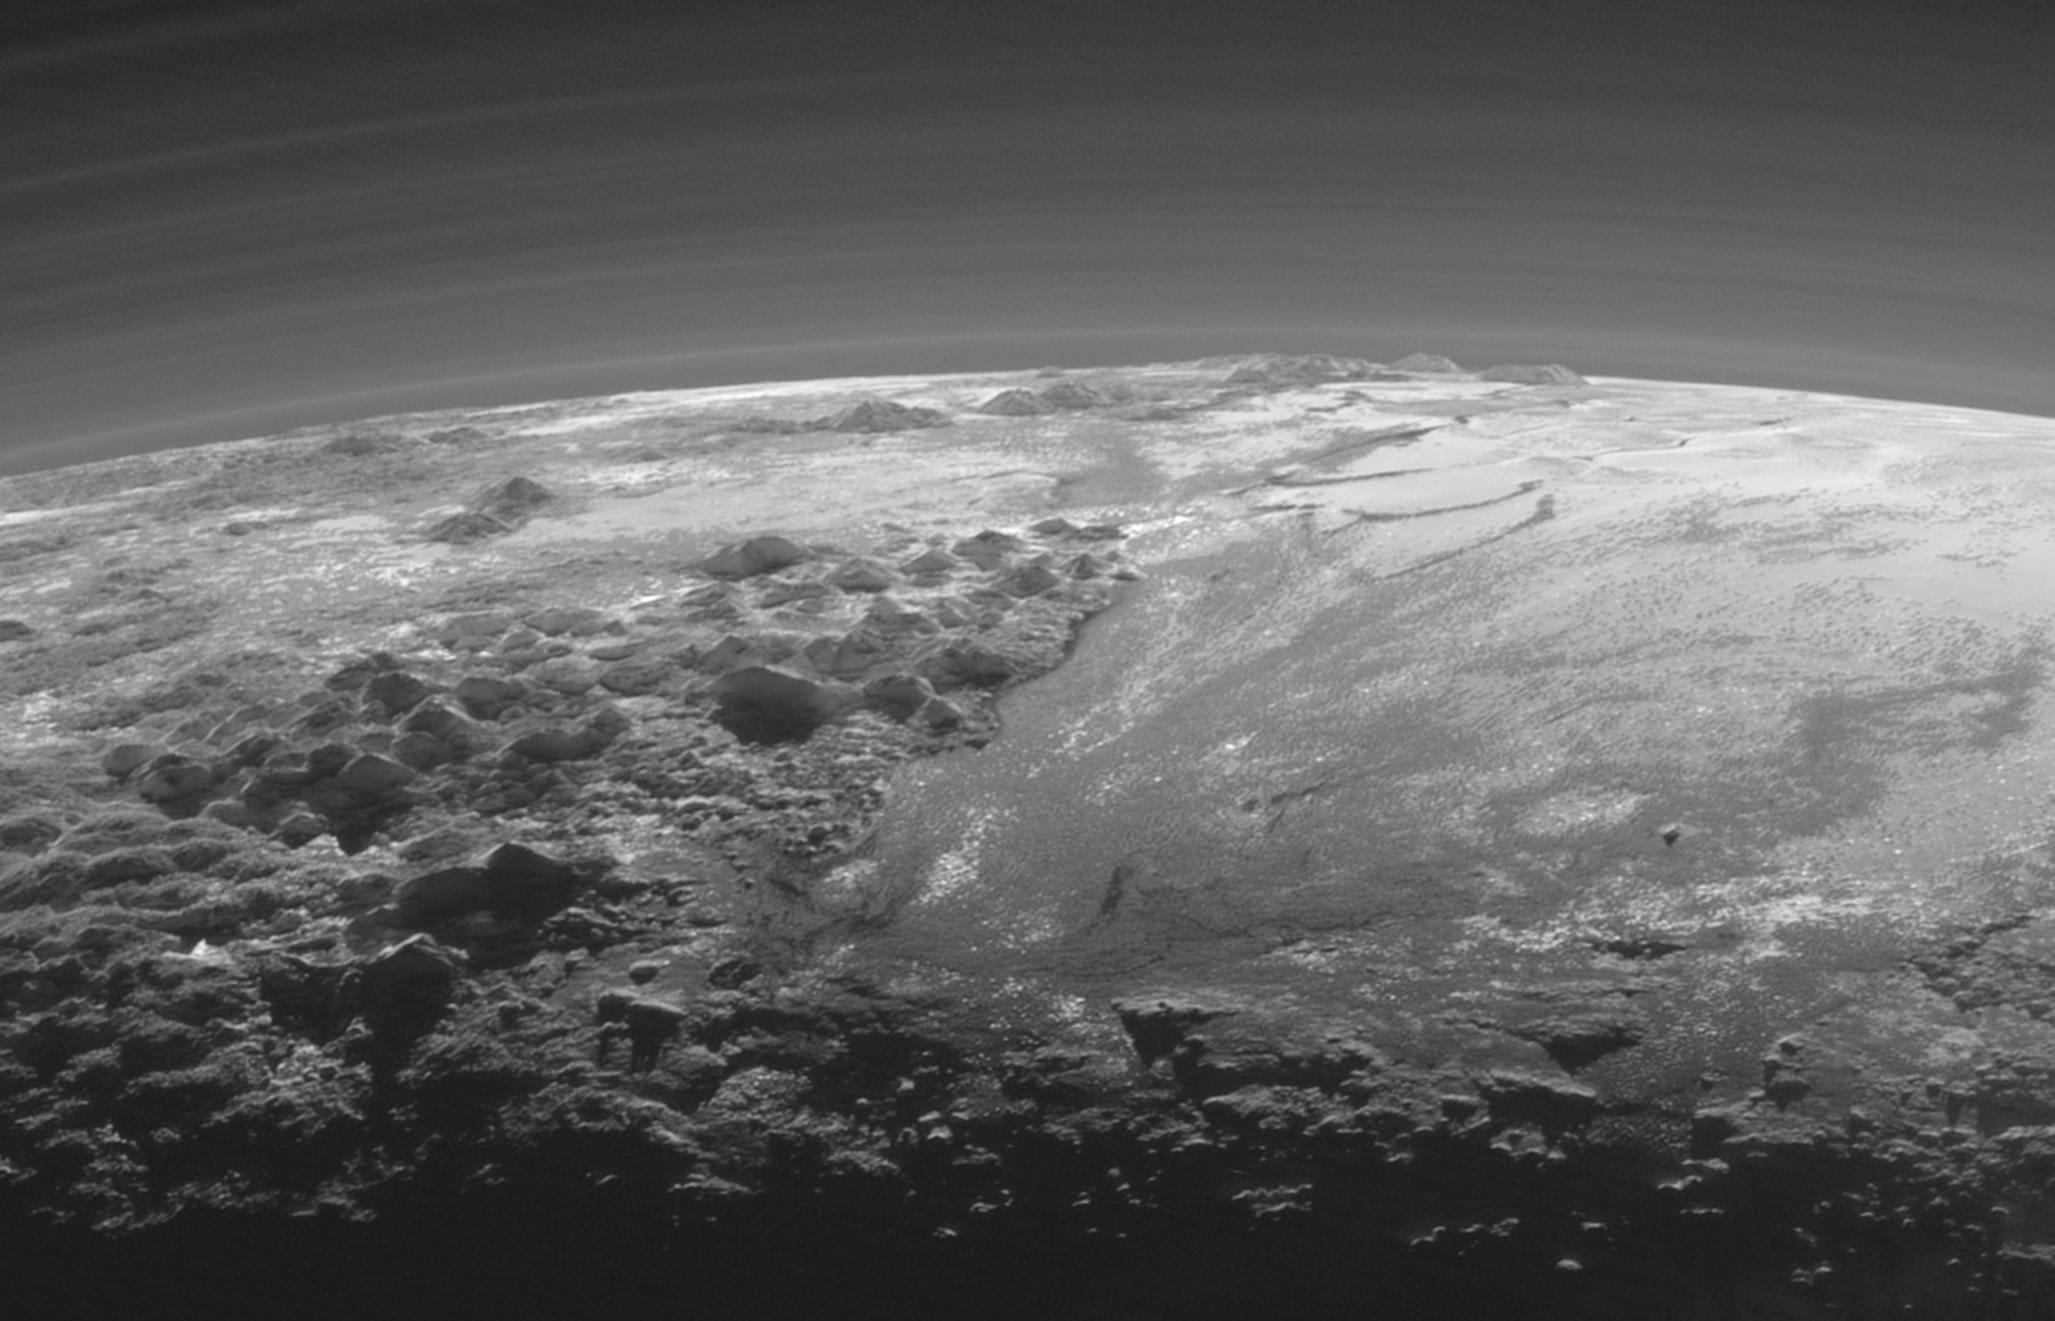 PIA19947-NH-Pluto-Norgay-Hillary-Mountains-20150714.jpg